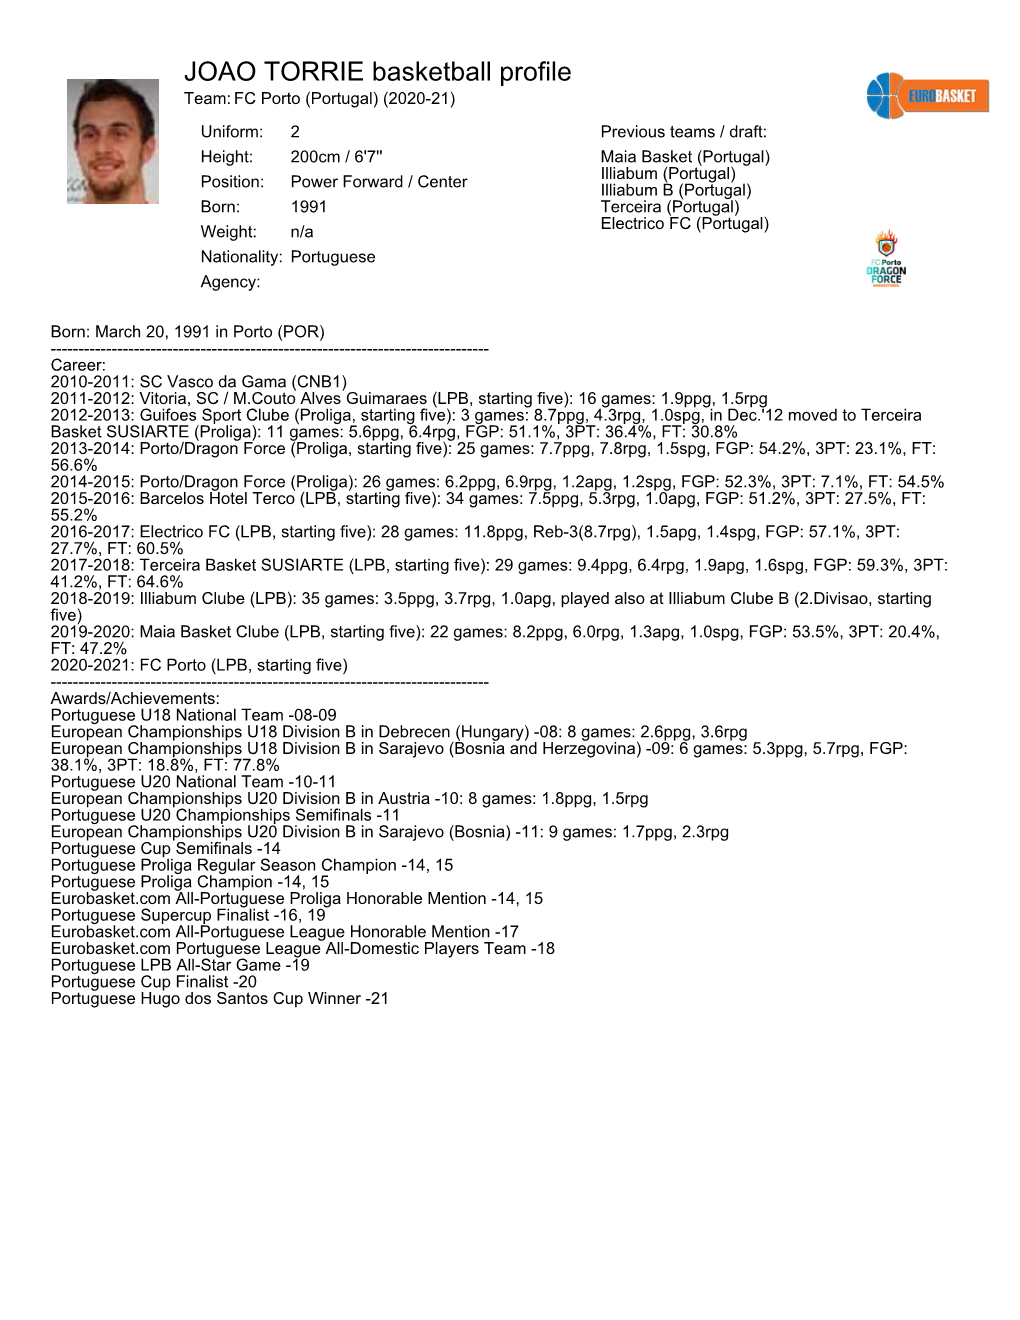 JOAO TORRIE Basketball Profile